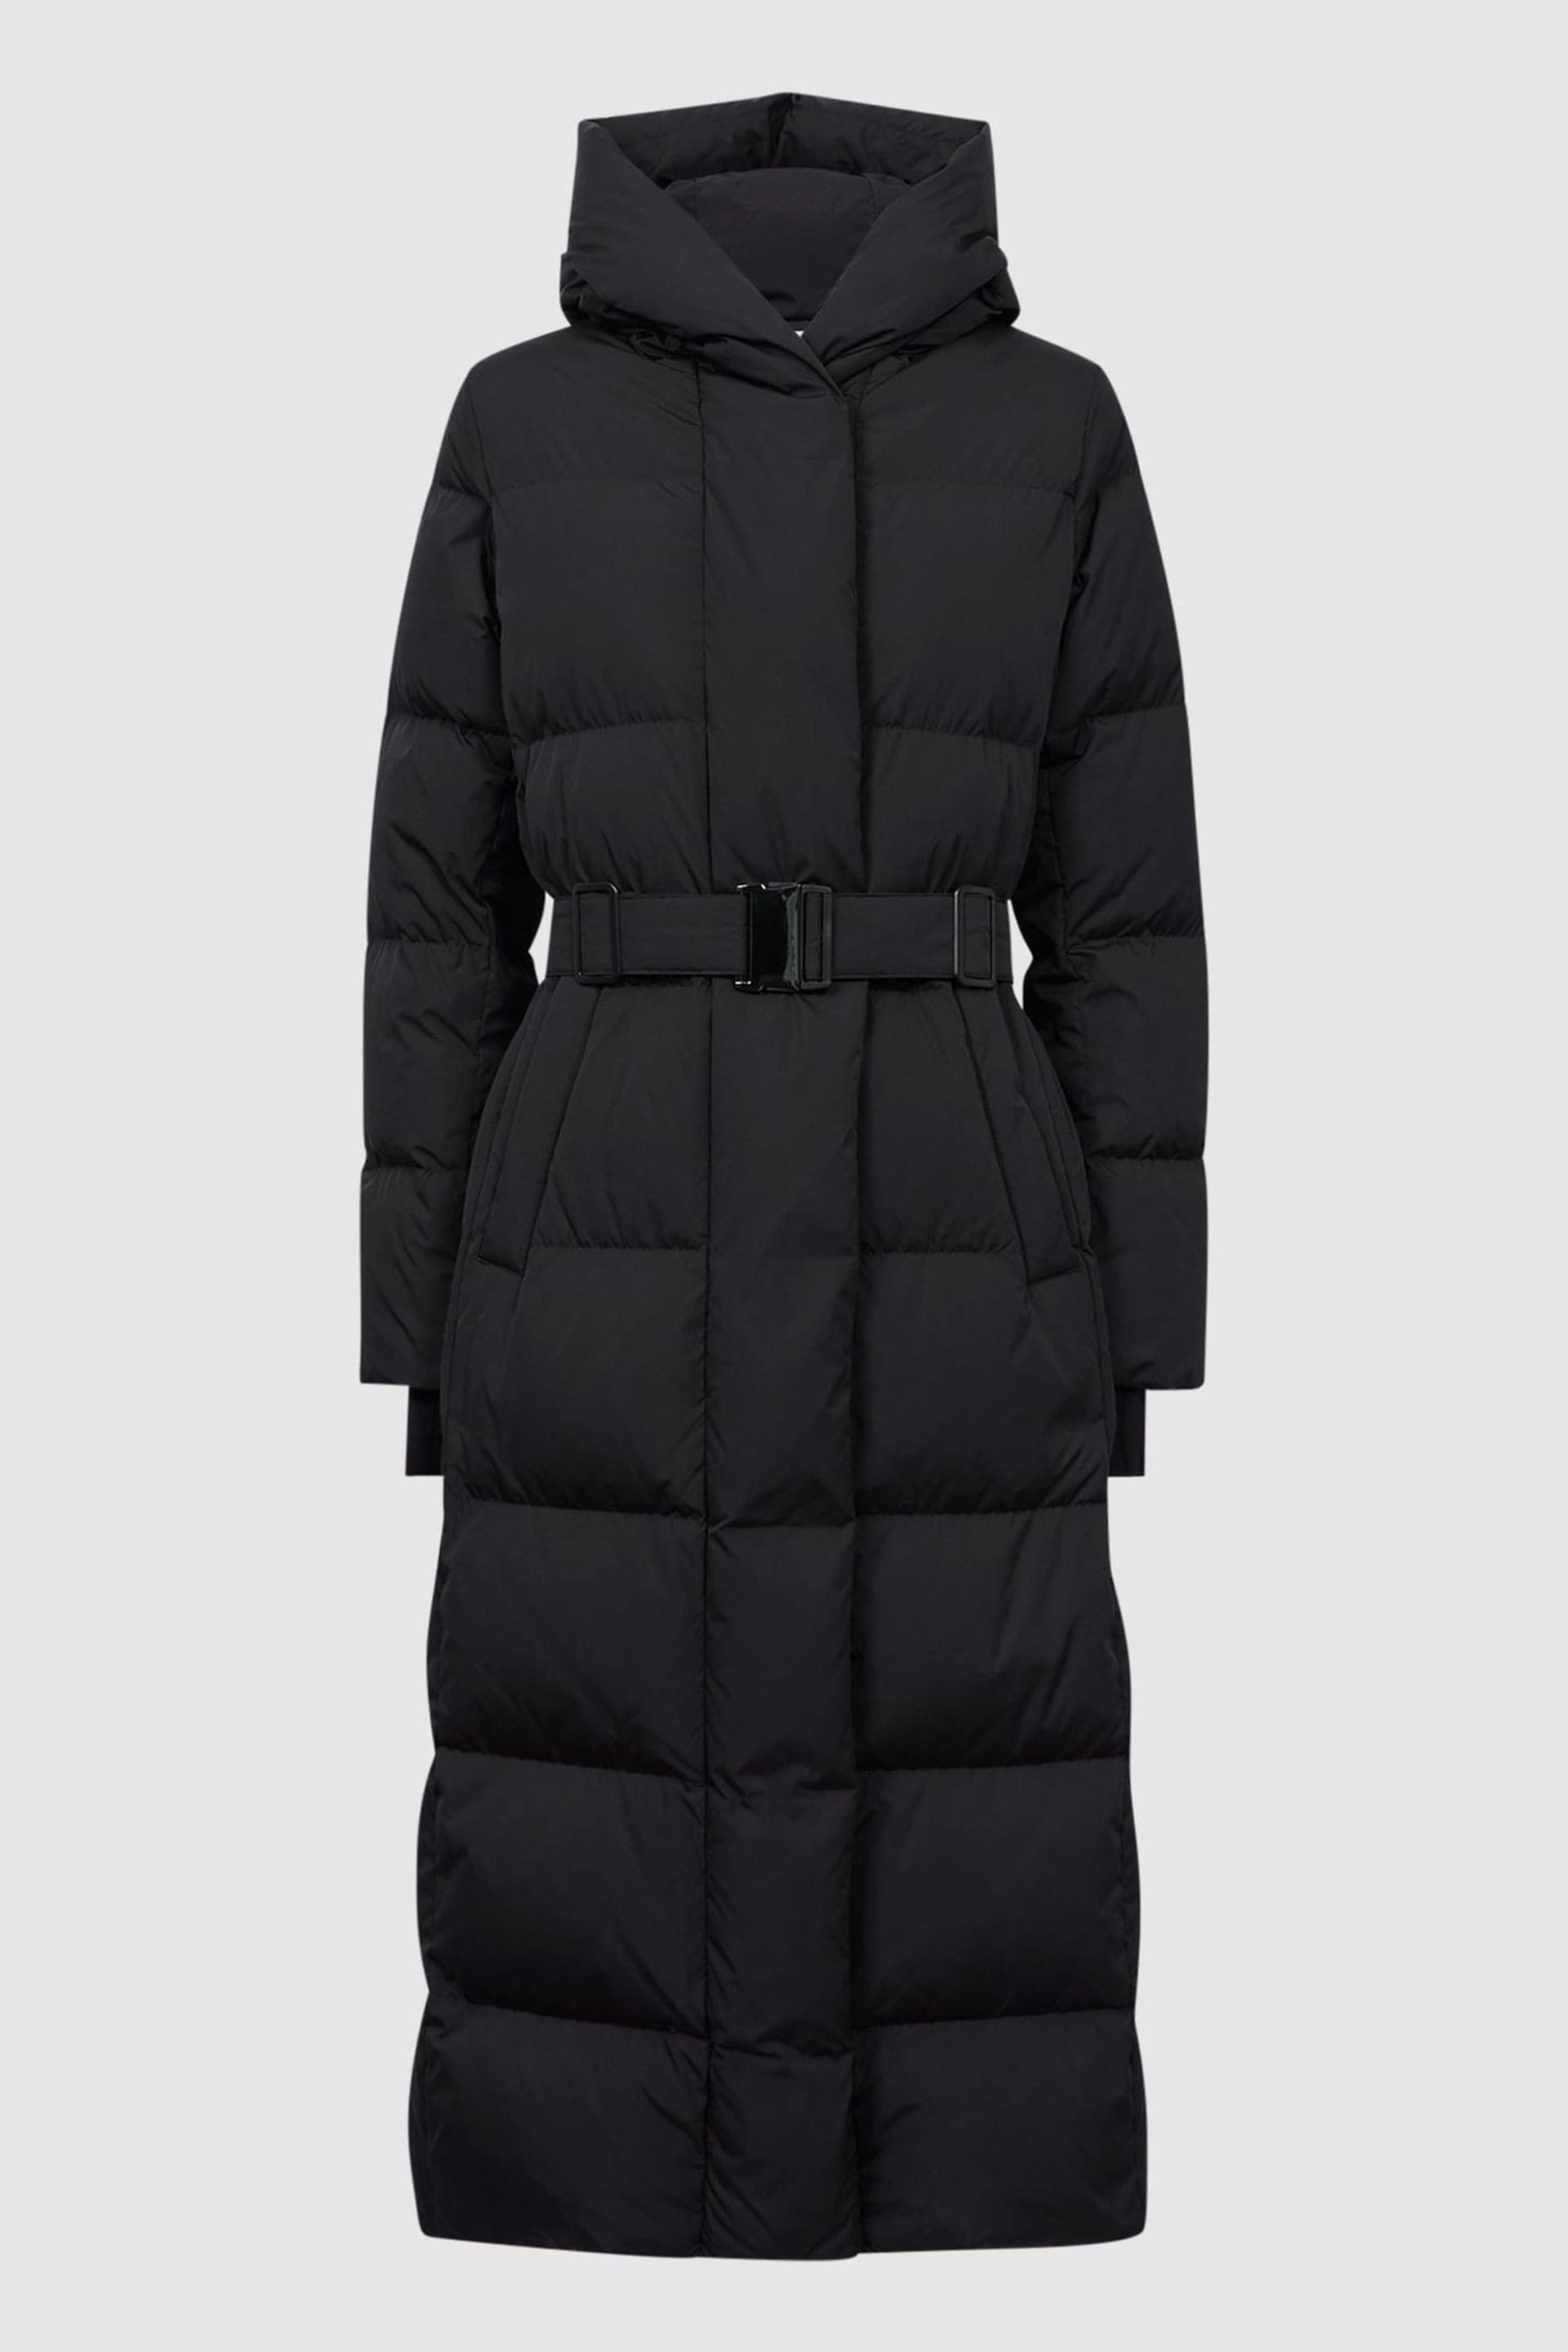 Reiss Black Larissa Long Belted Puffer Coat - Image 2 of 6